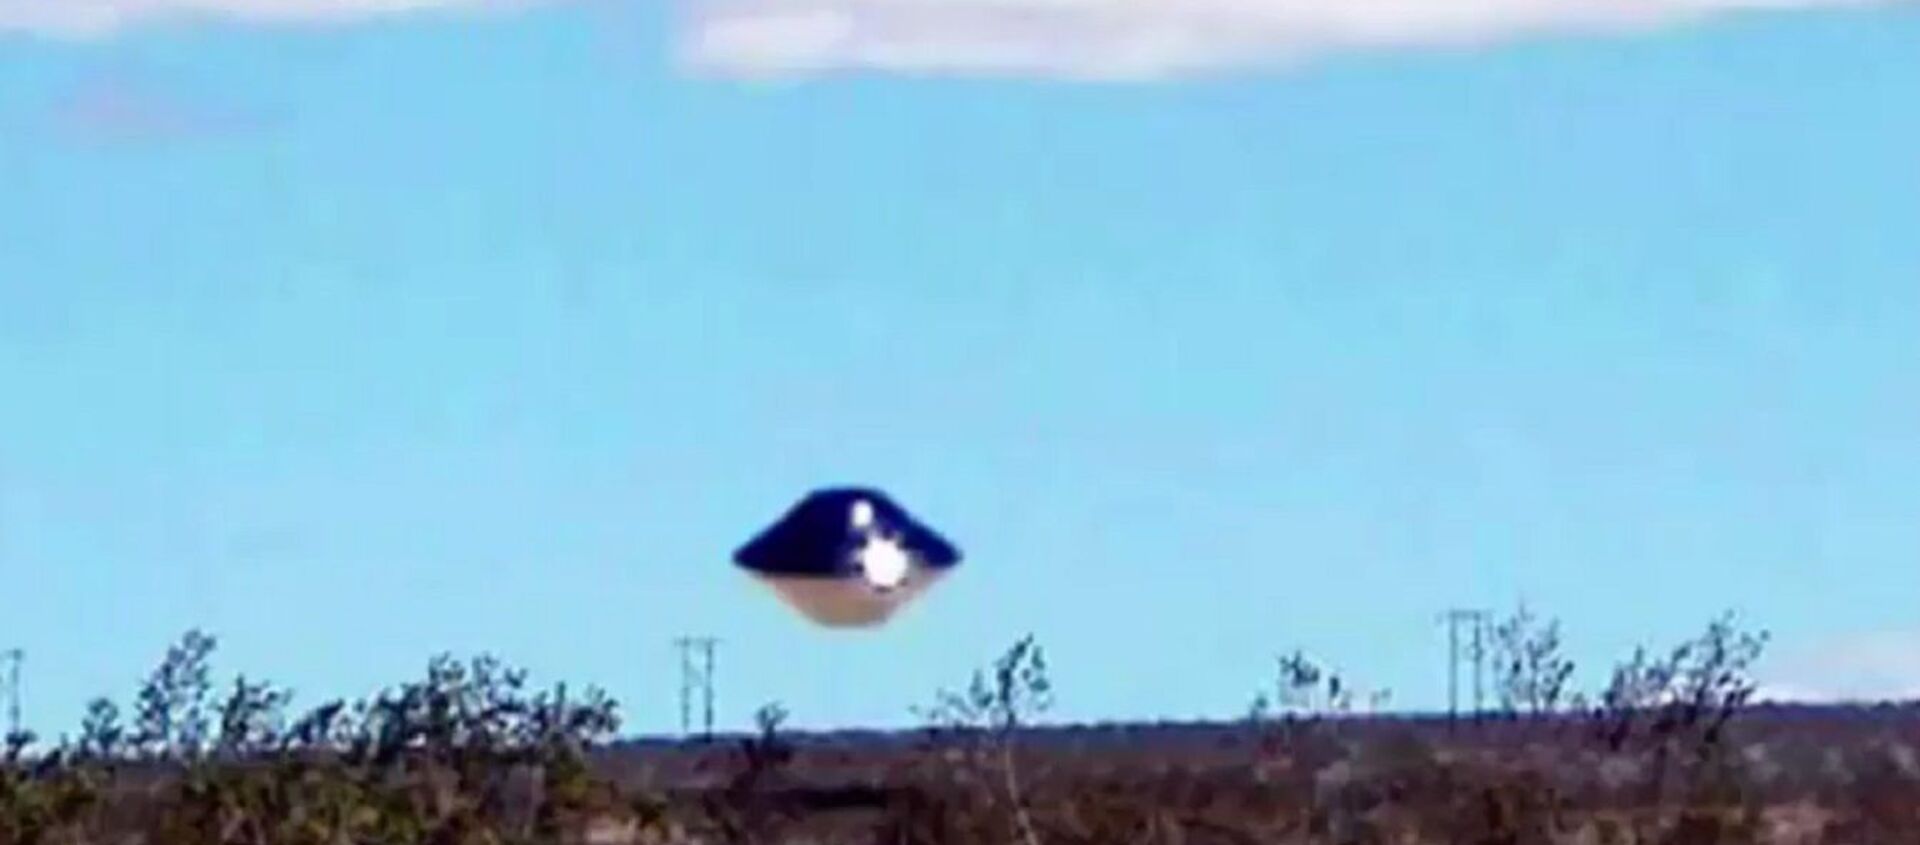 UFO sighting in California - Sputnik International, 1920, 14.09.2020